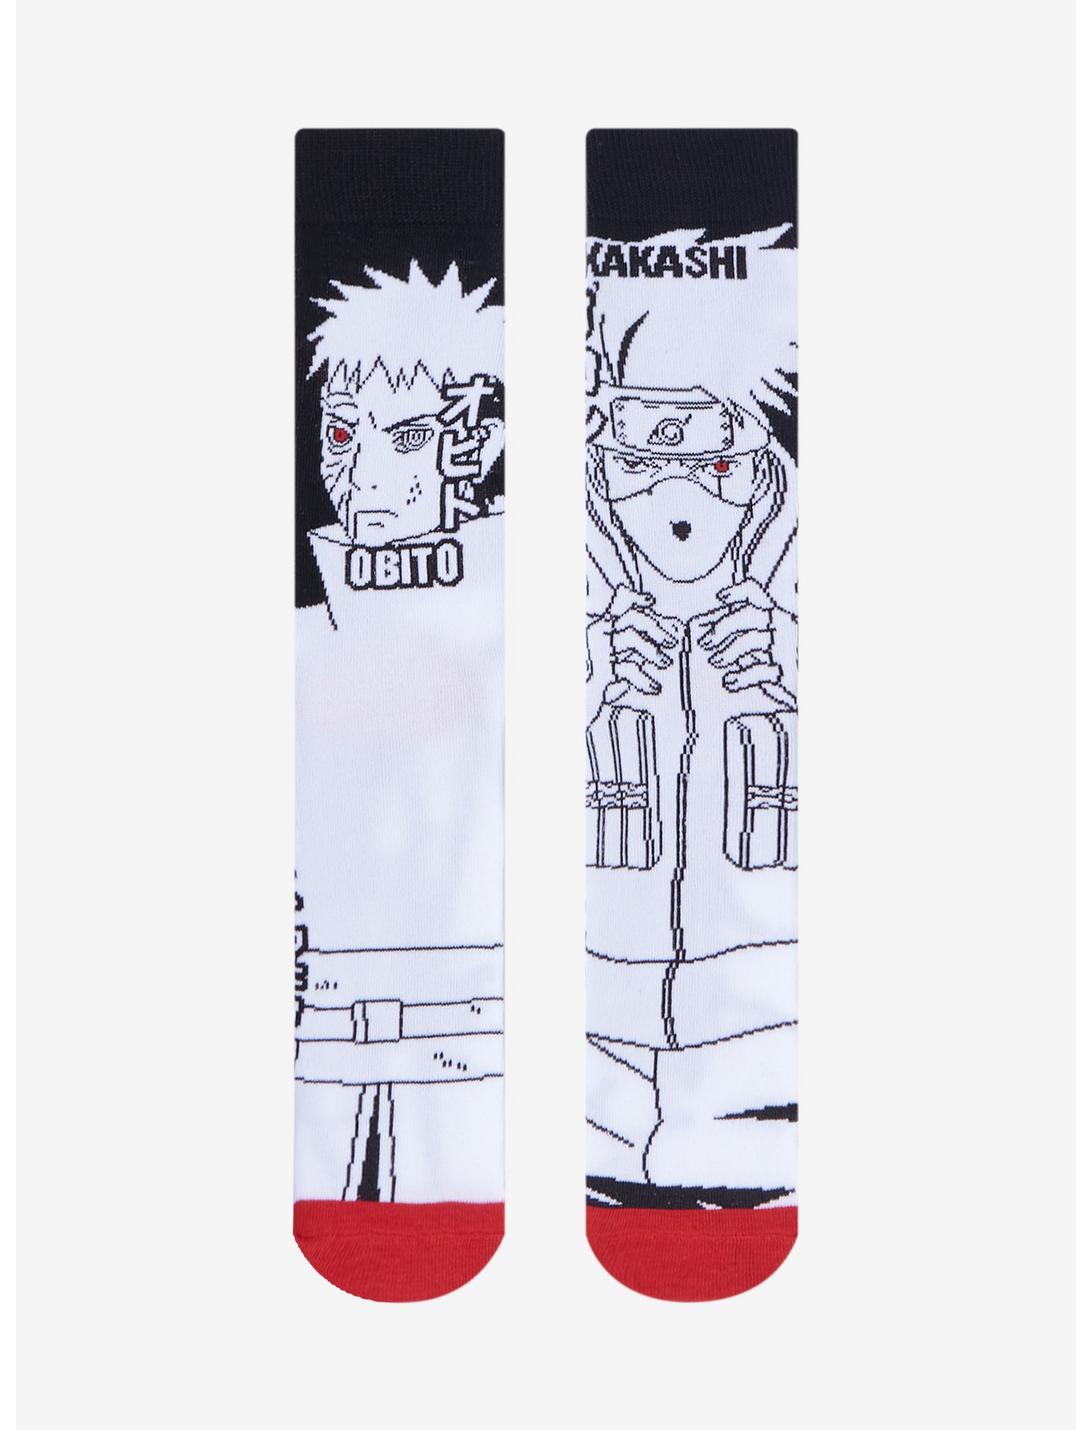 Naruto Shippuden Obito & Kakashi Mismatched Crew Socks, , hi-res